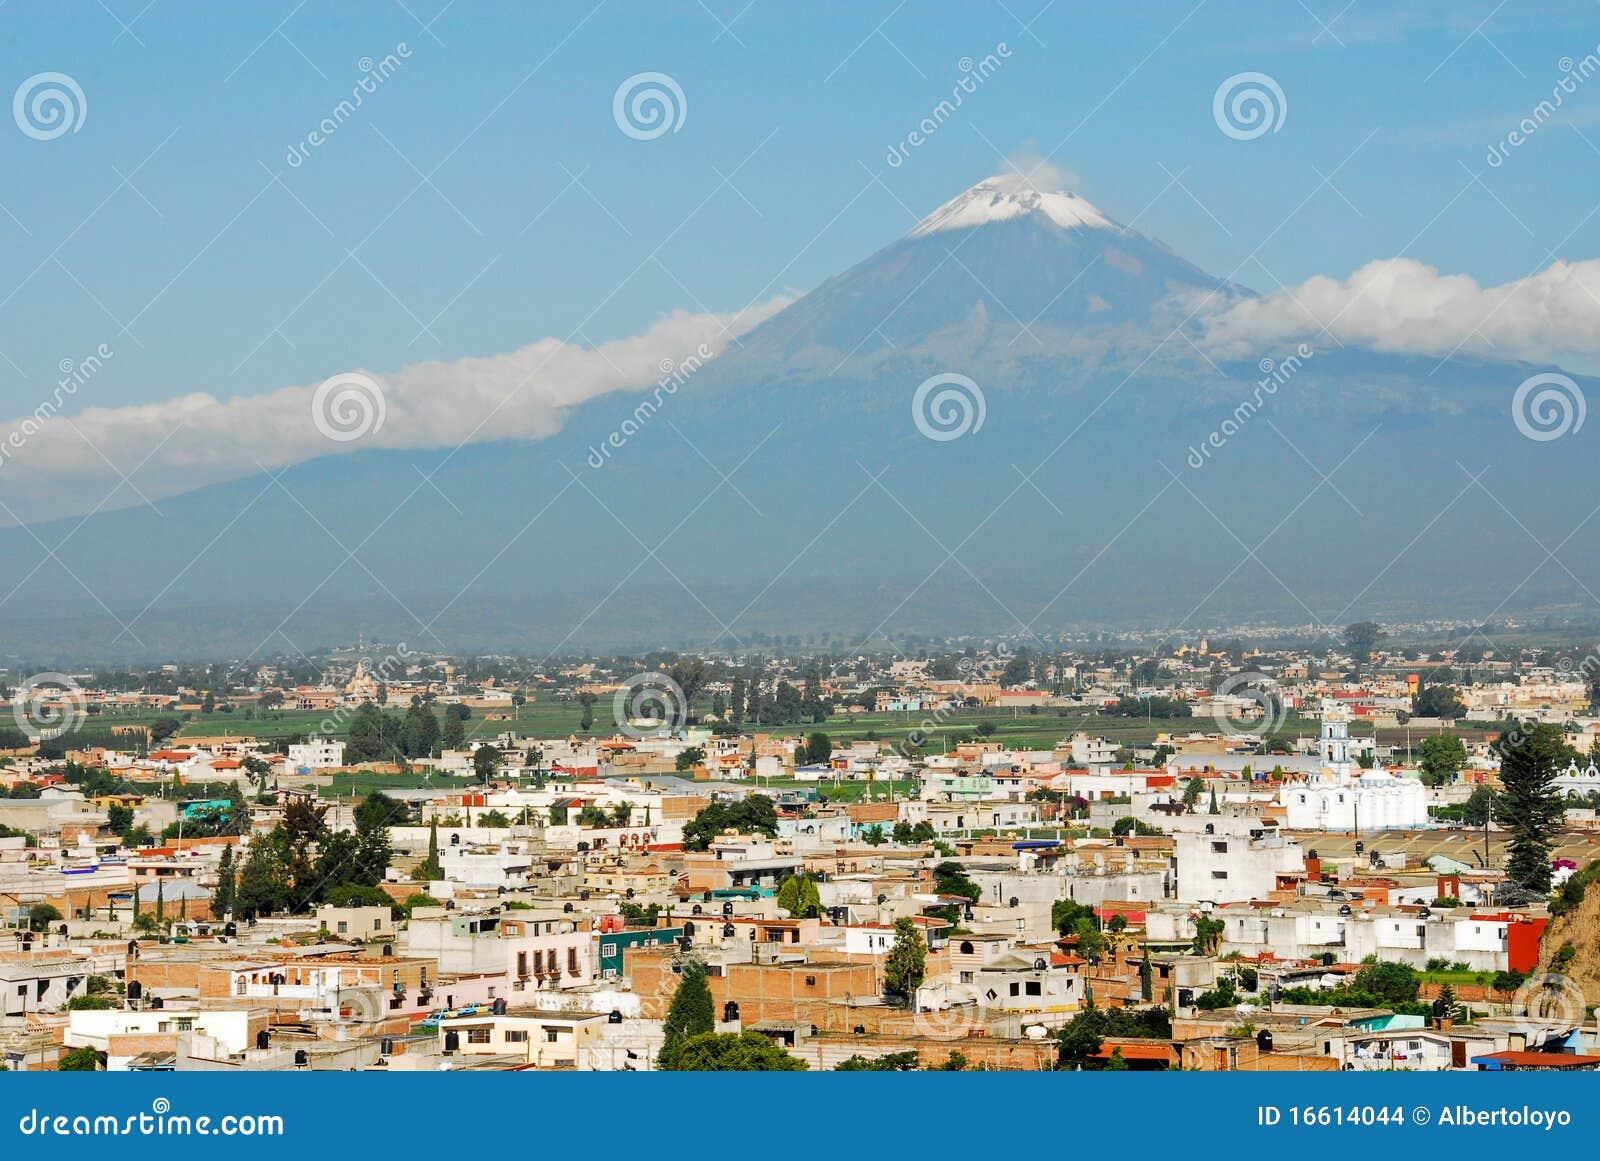 popocatepetl volcano view from cholula